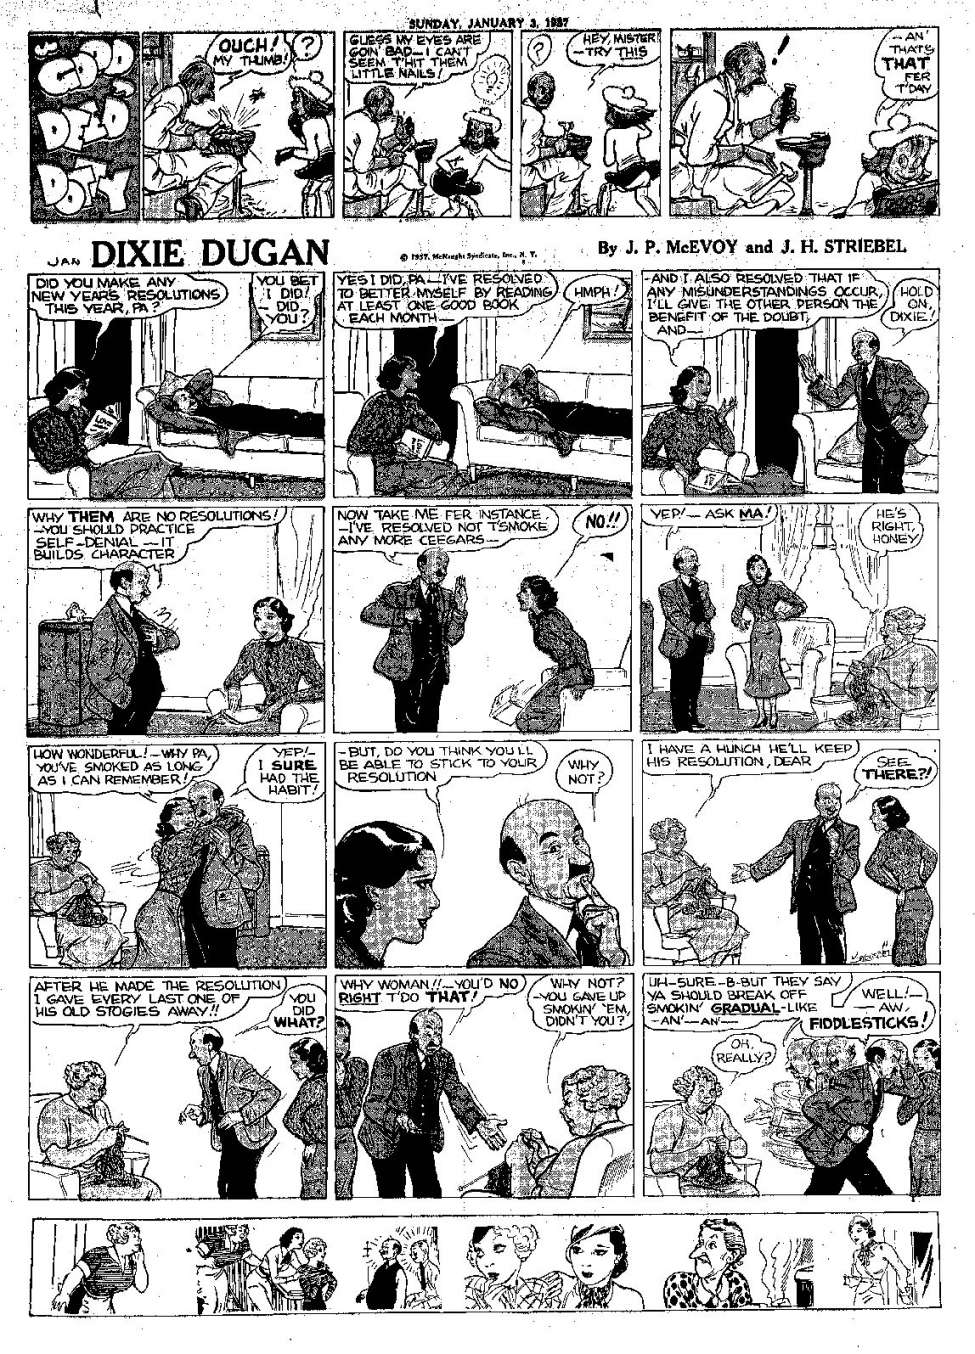 Comic Book Cover For Dixie Dugan 1937 - Sundays